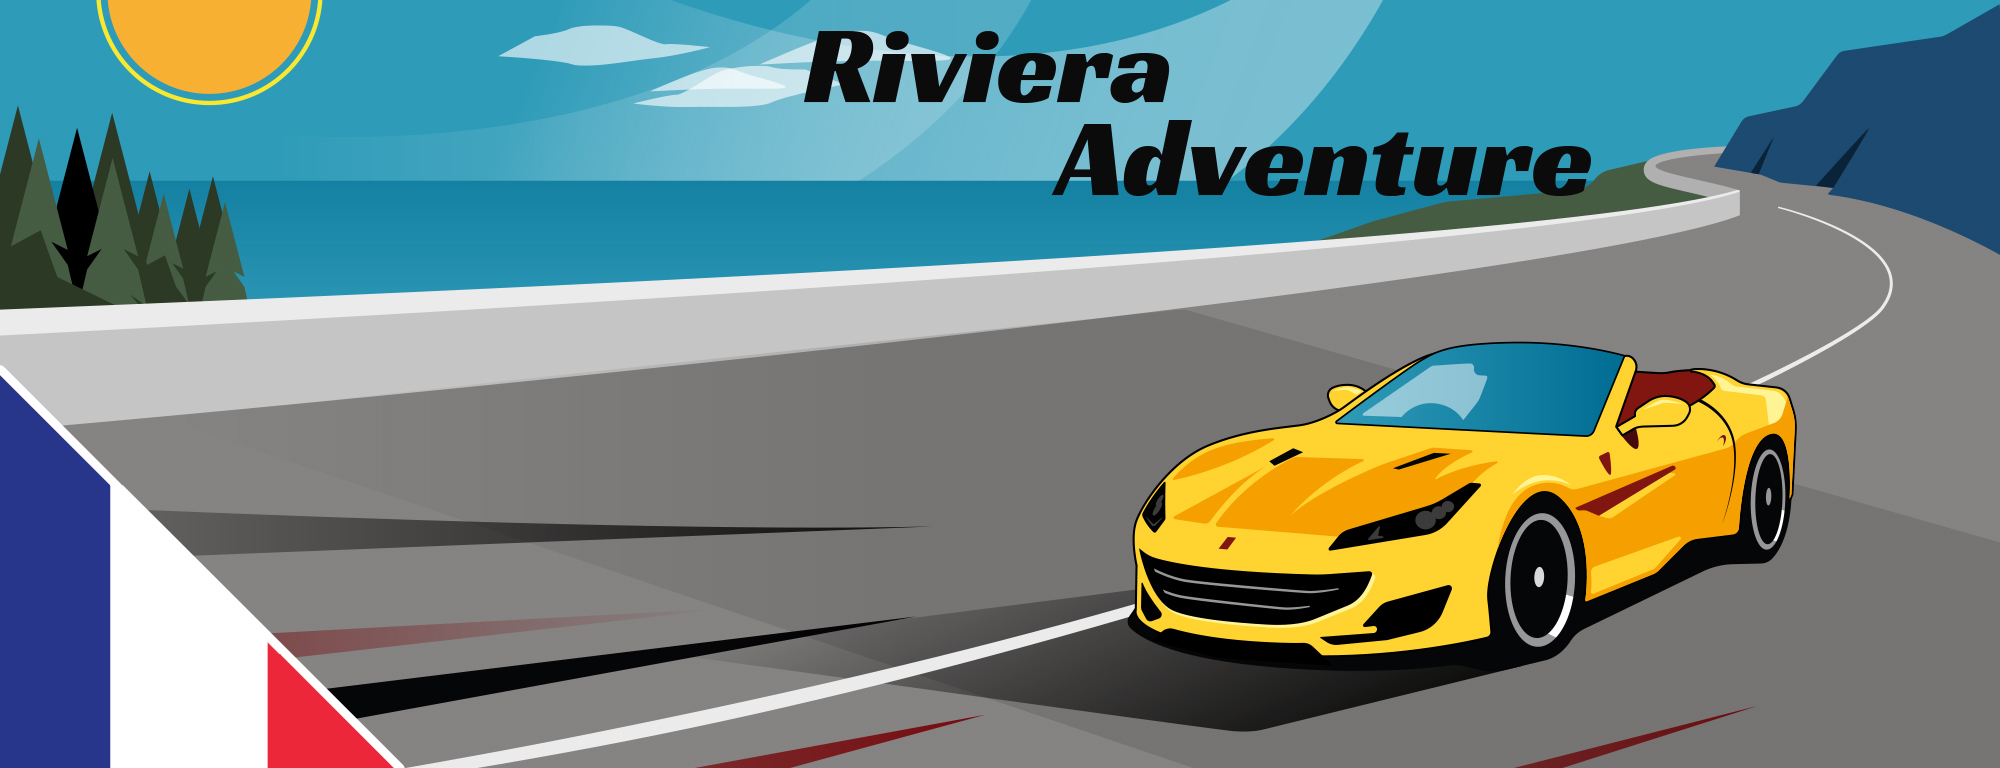 Riviera Adventure